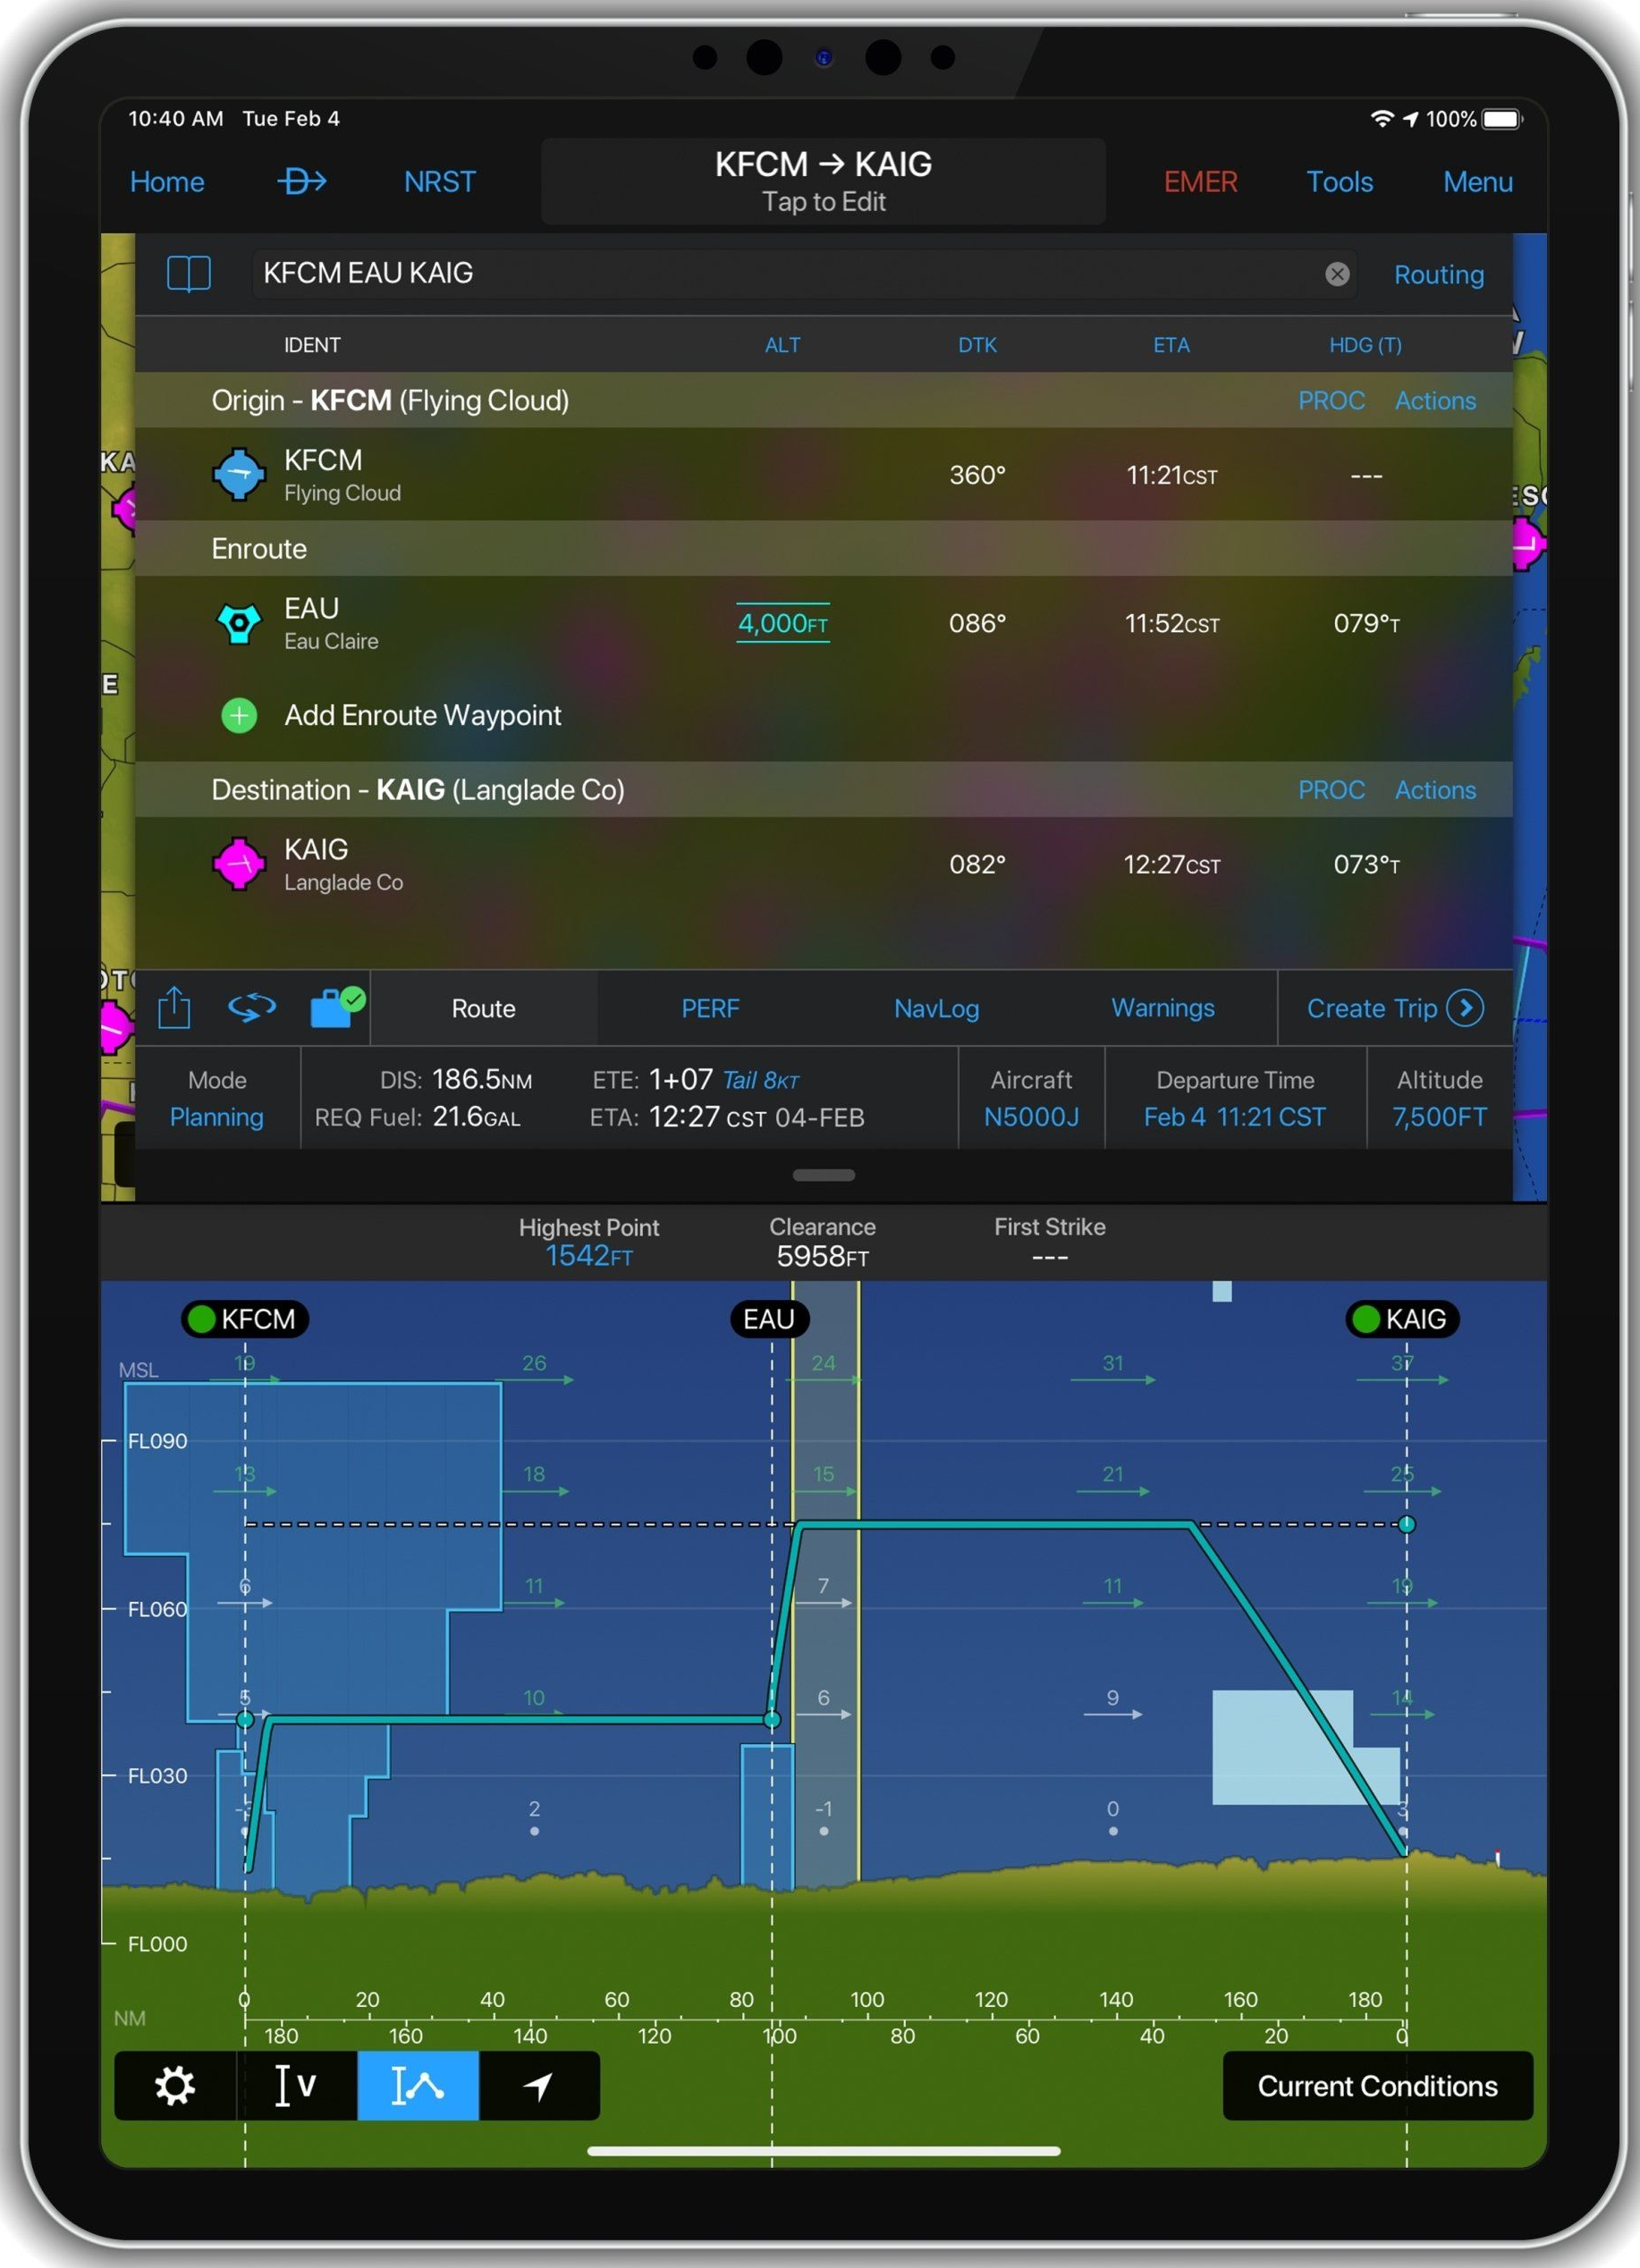 Garmin brings flight deck technology and tools to the Garmin Pilot app